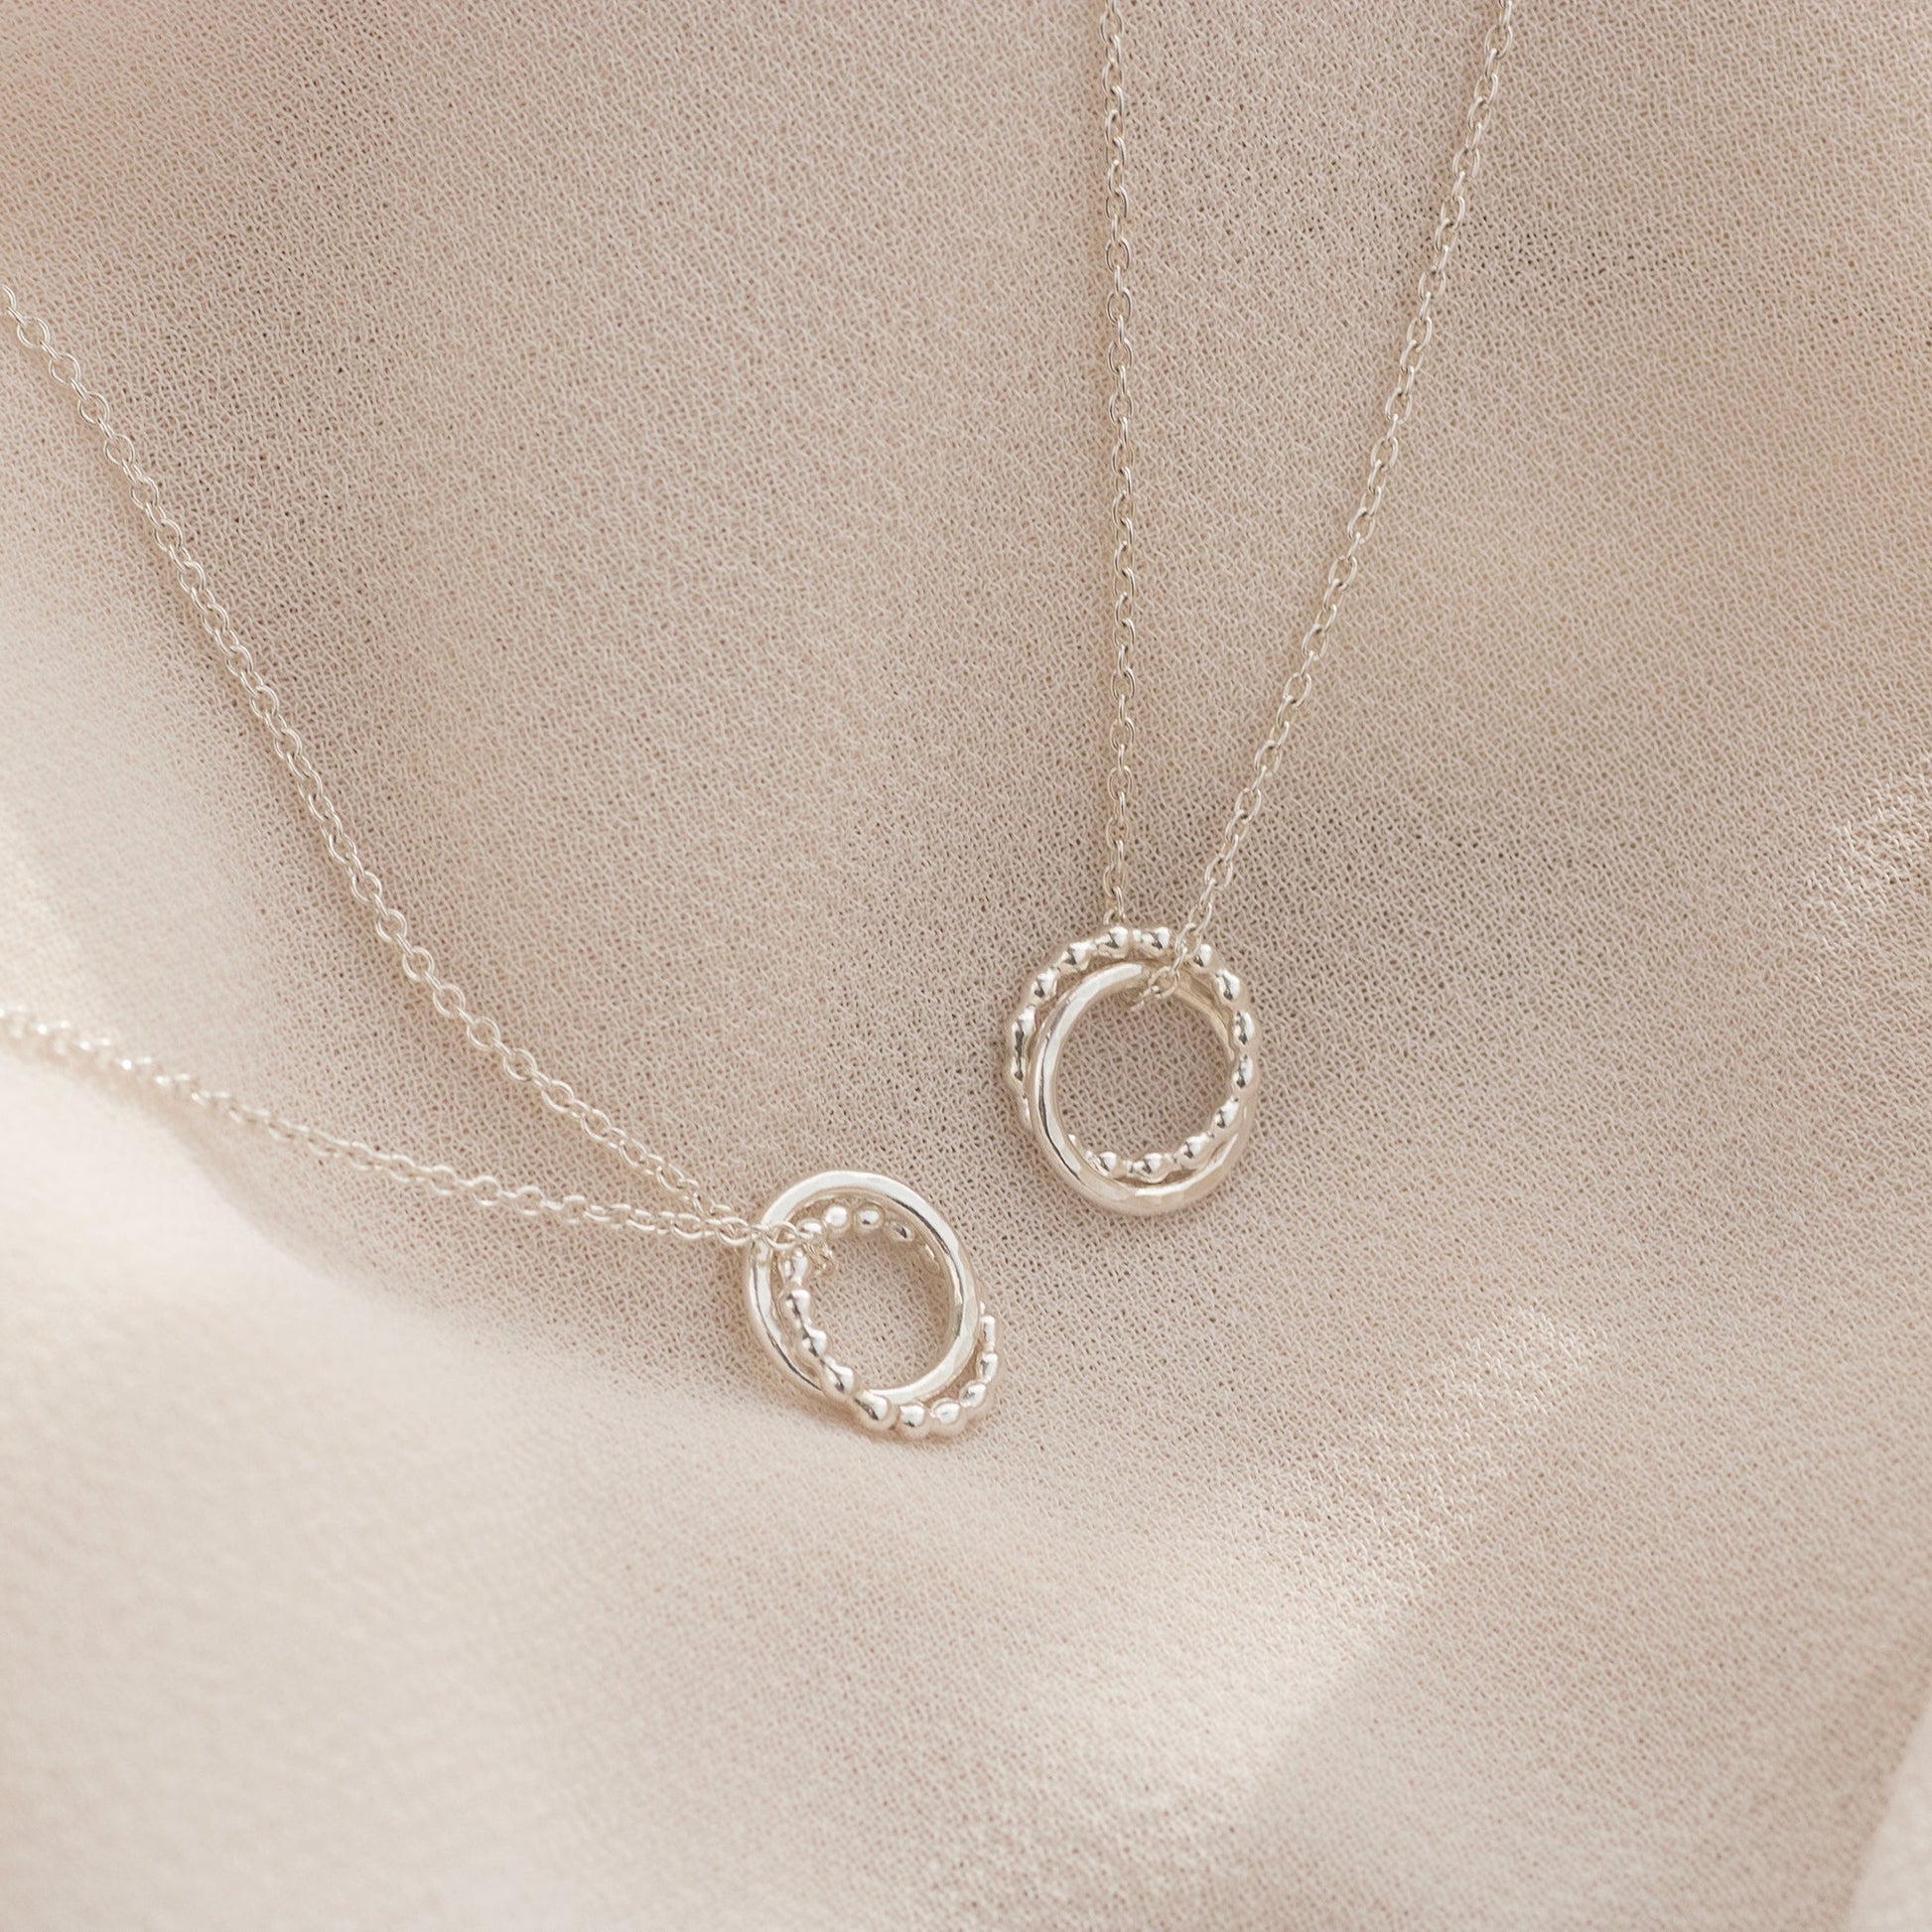 Bride & Bridesmaid Necklaces Matching Set - Silver Love Knot Necklaces